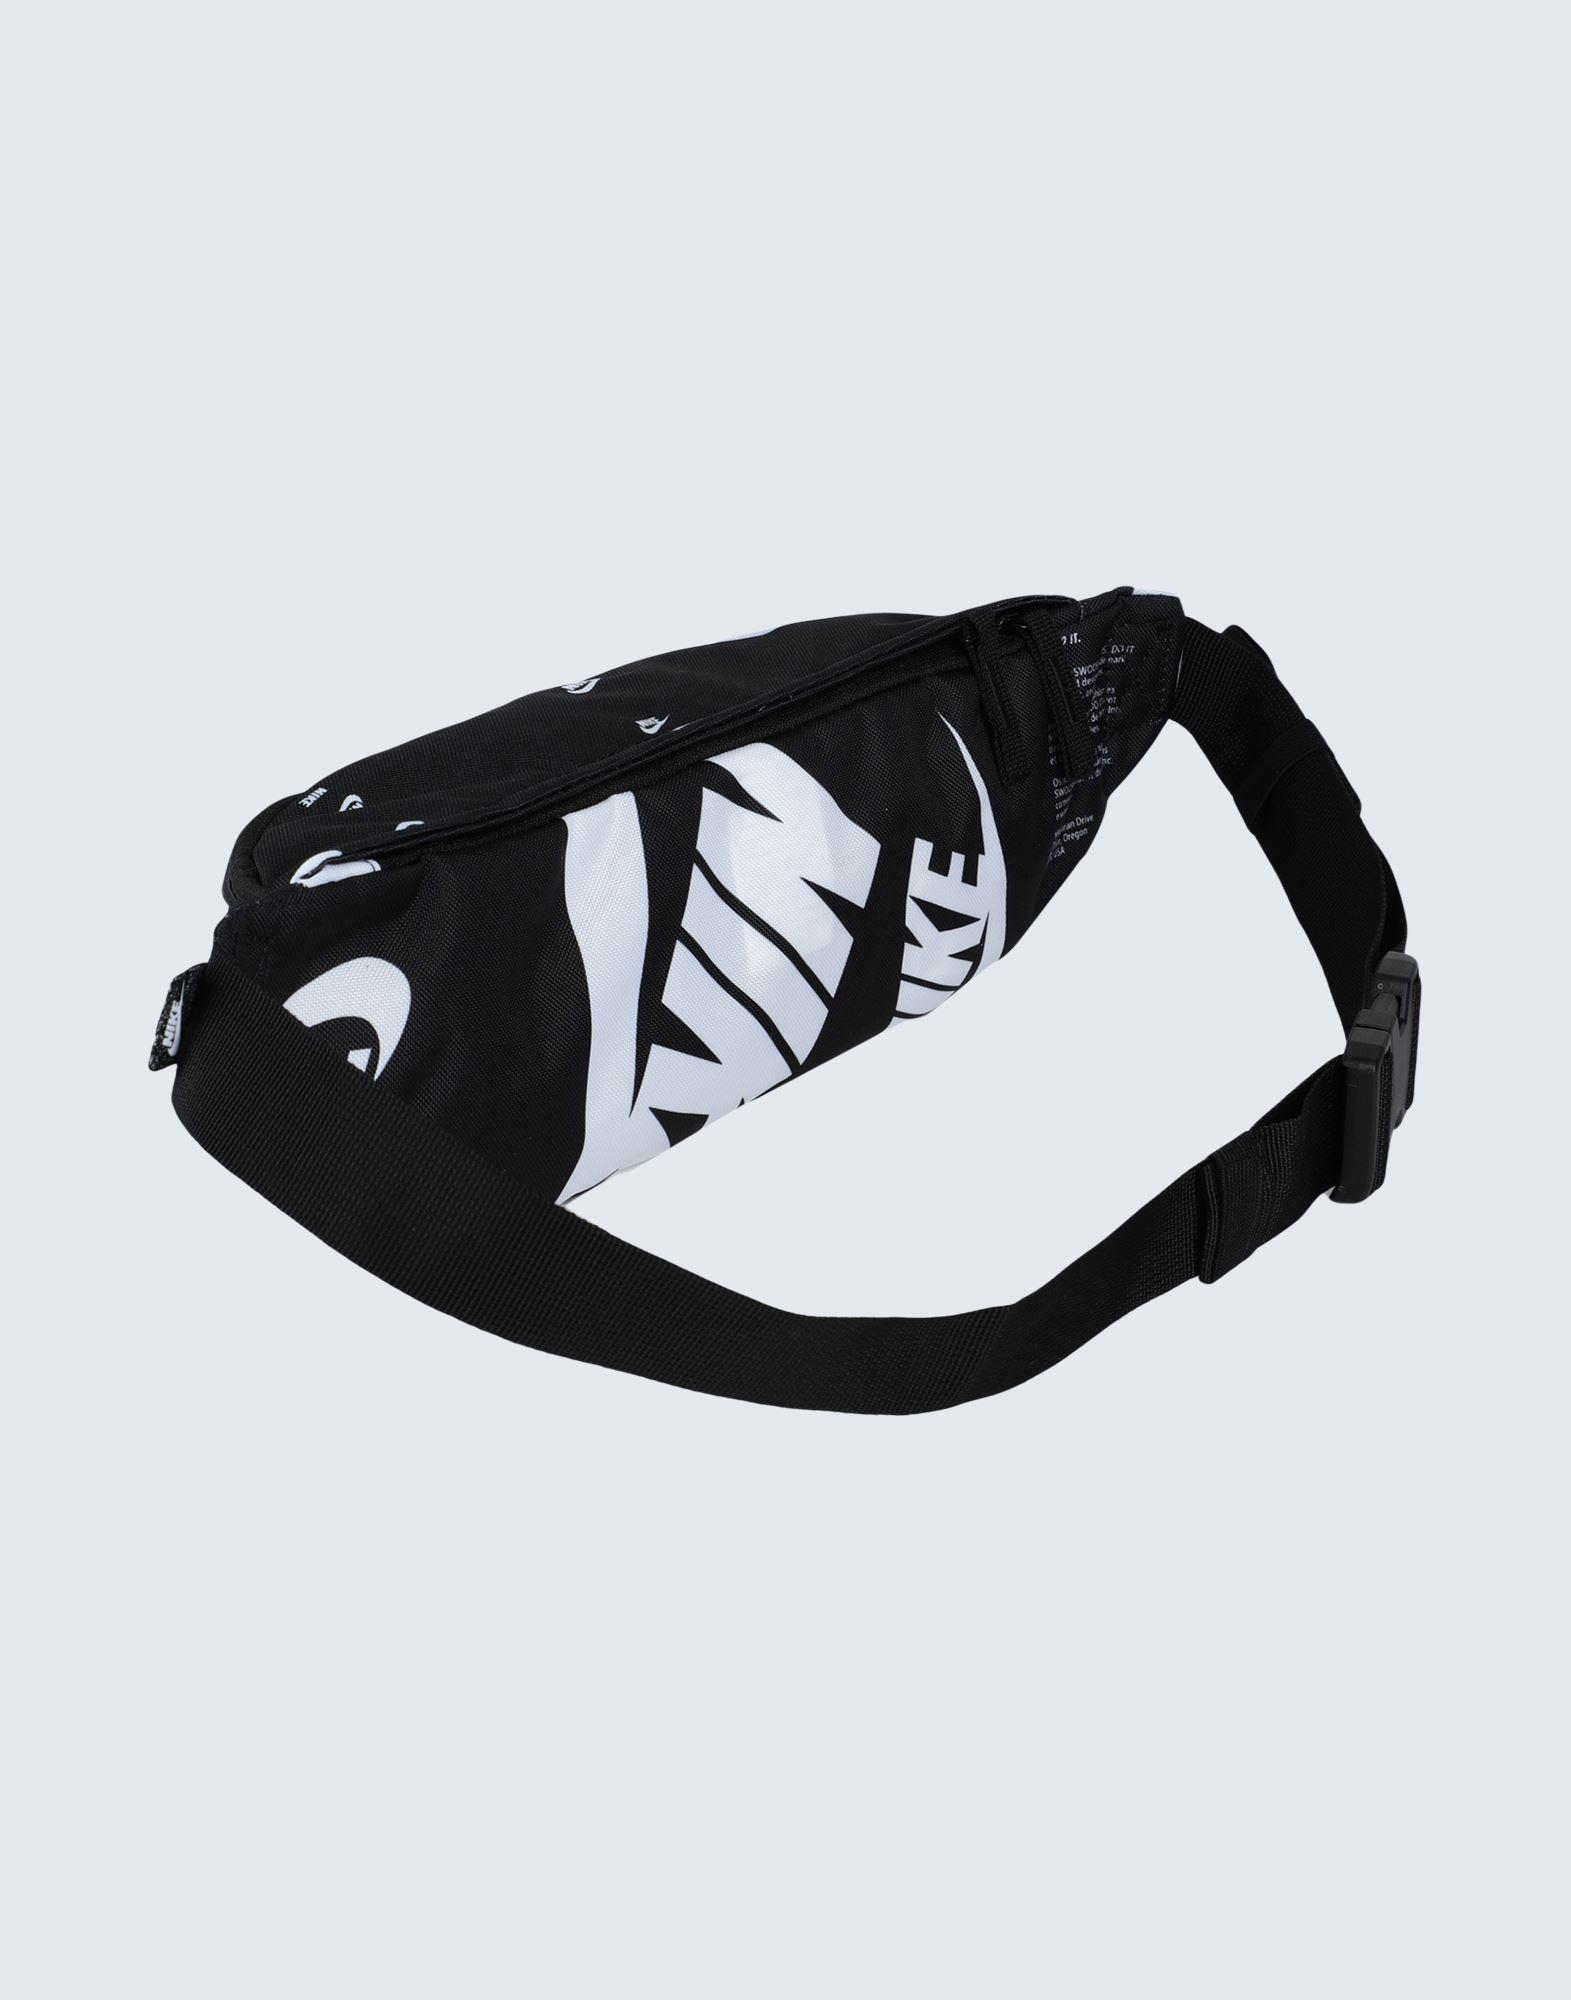 Nike 1L Heritage Waistpack / Bum Bag - Black/White